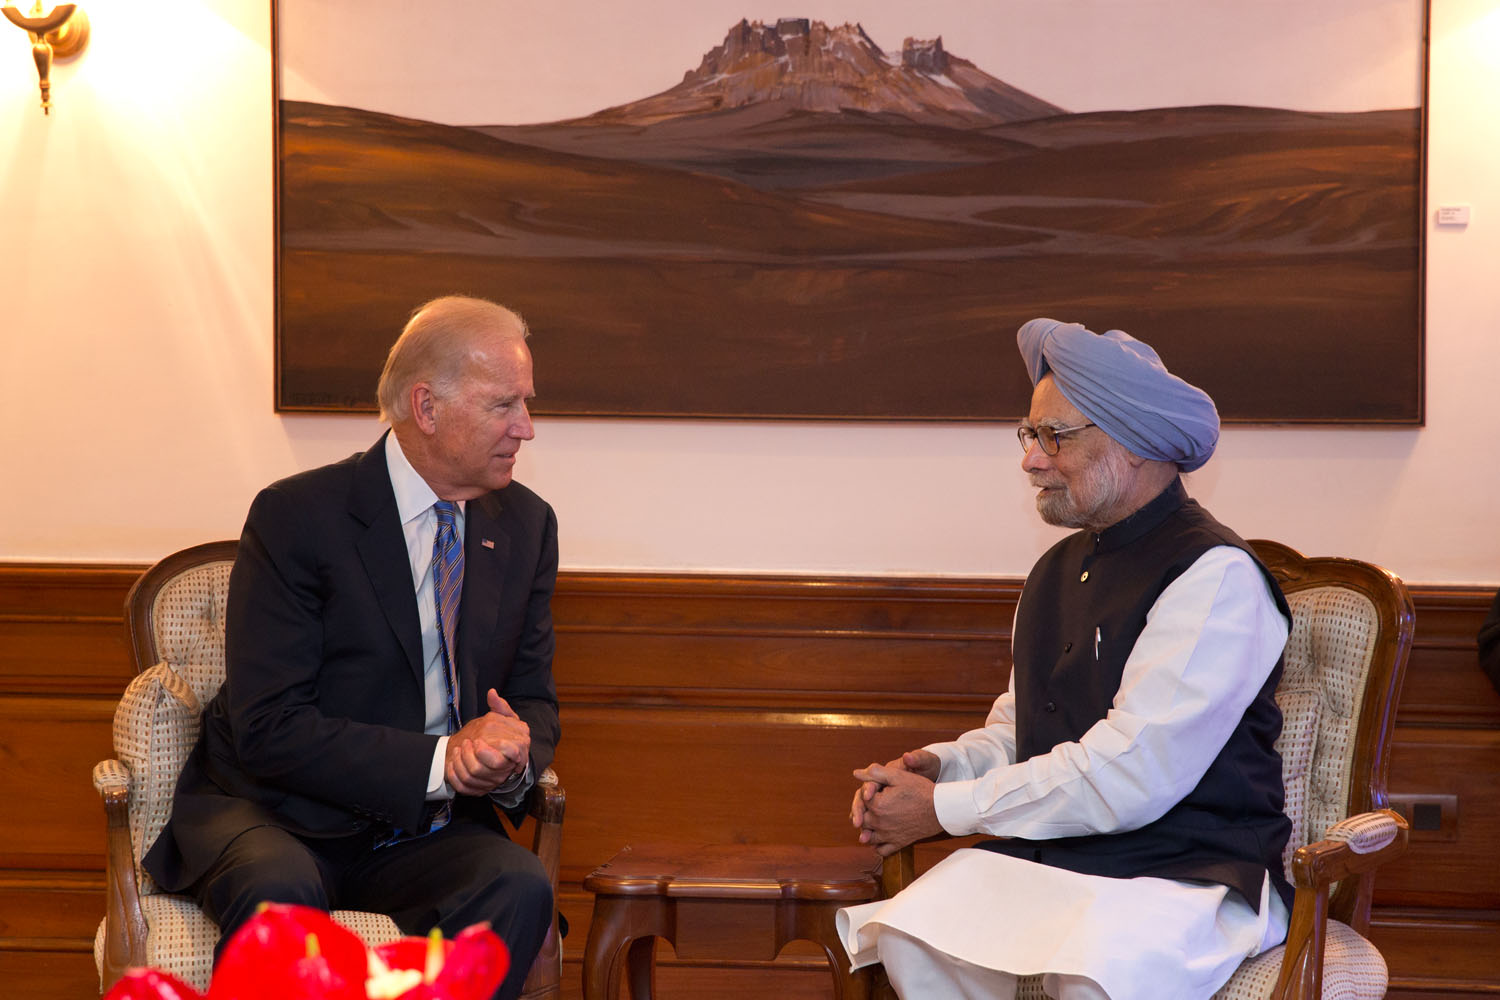 Vice President Joe Biden meets with Indian Prime Minister Dr. Manmohan Singh